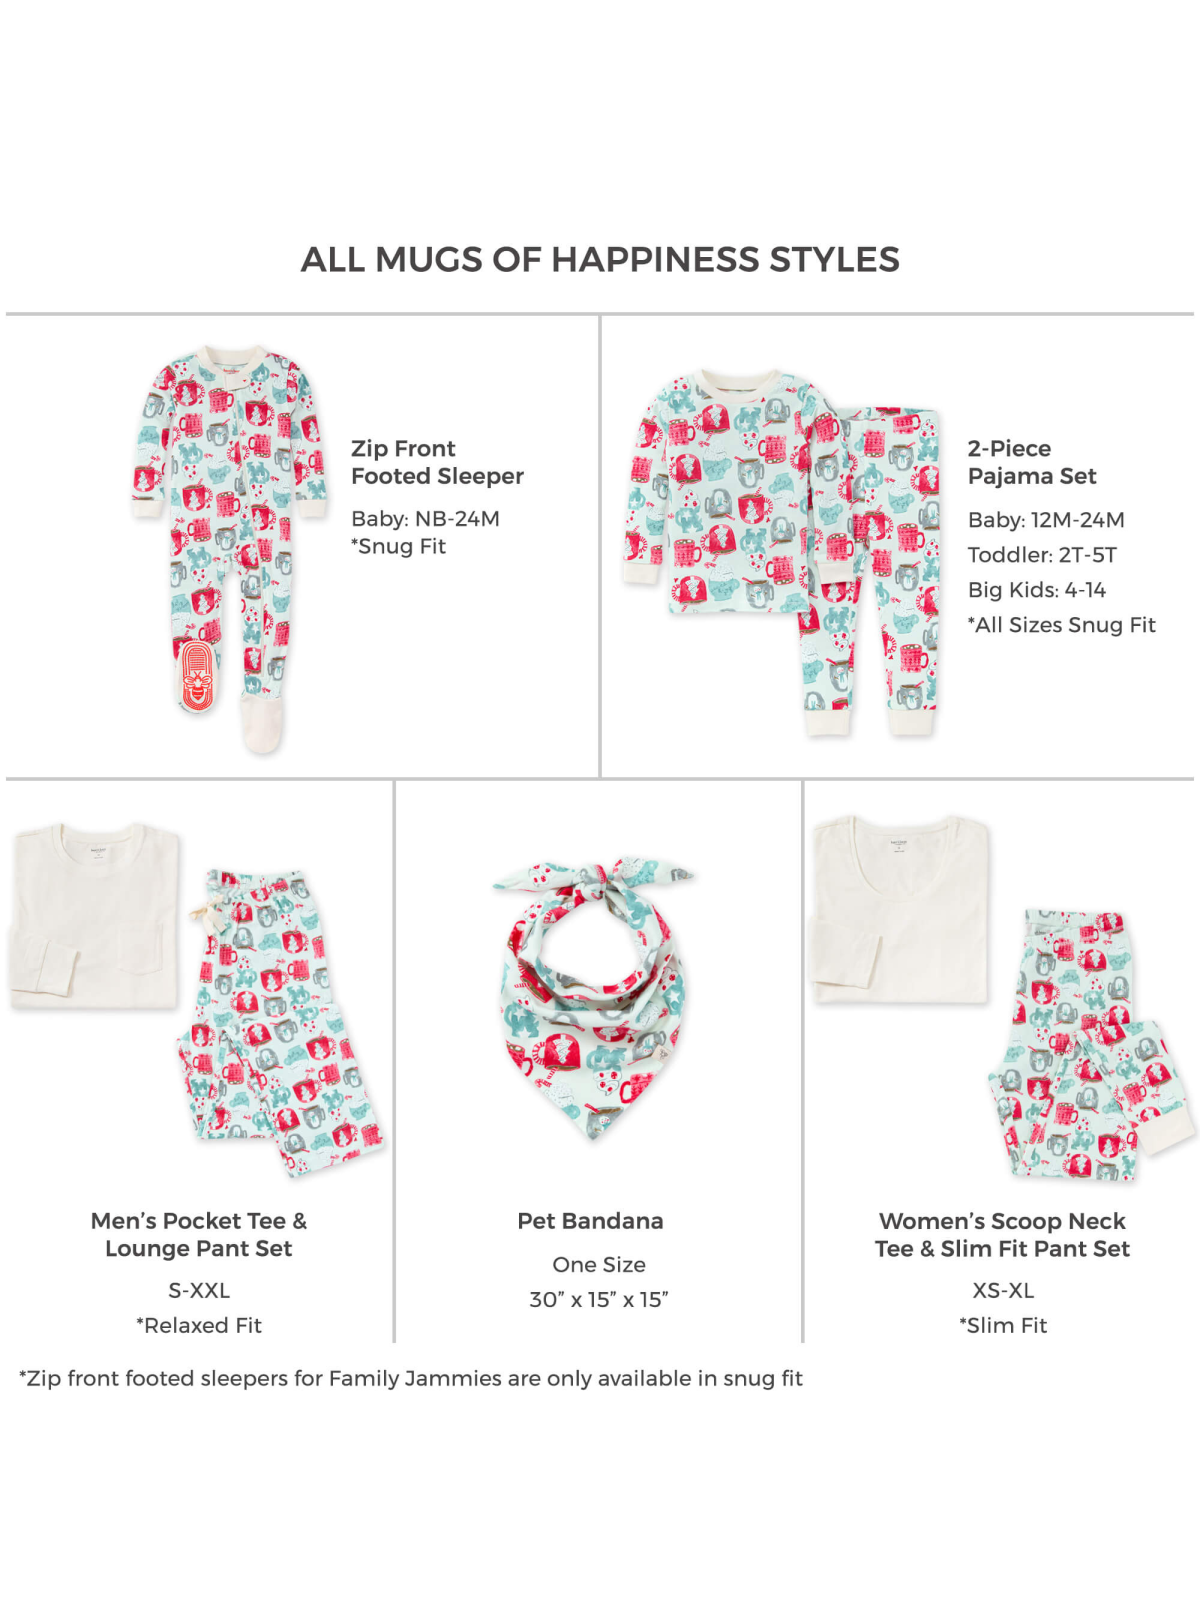 Adult Men's Pocket Tee Pajama Set, Mugs Of Happiness